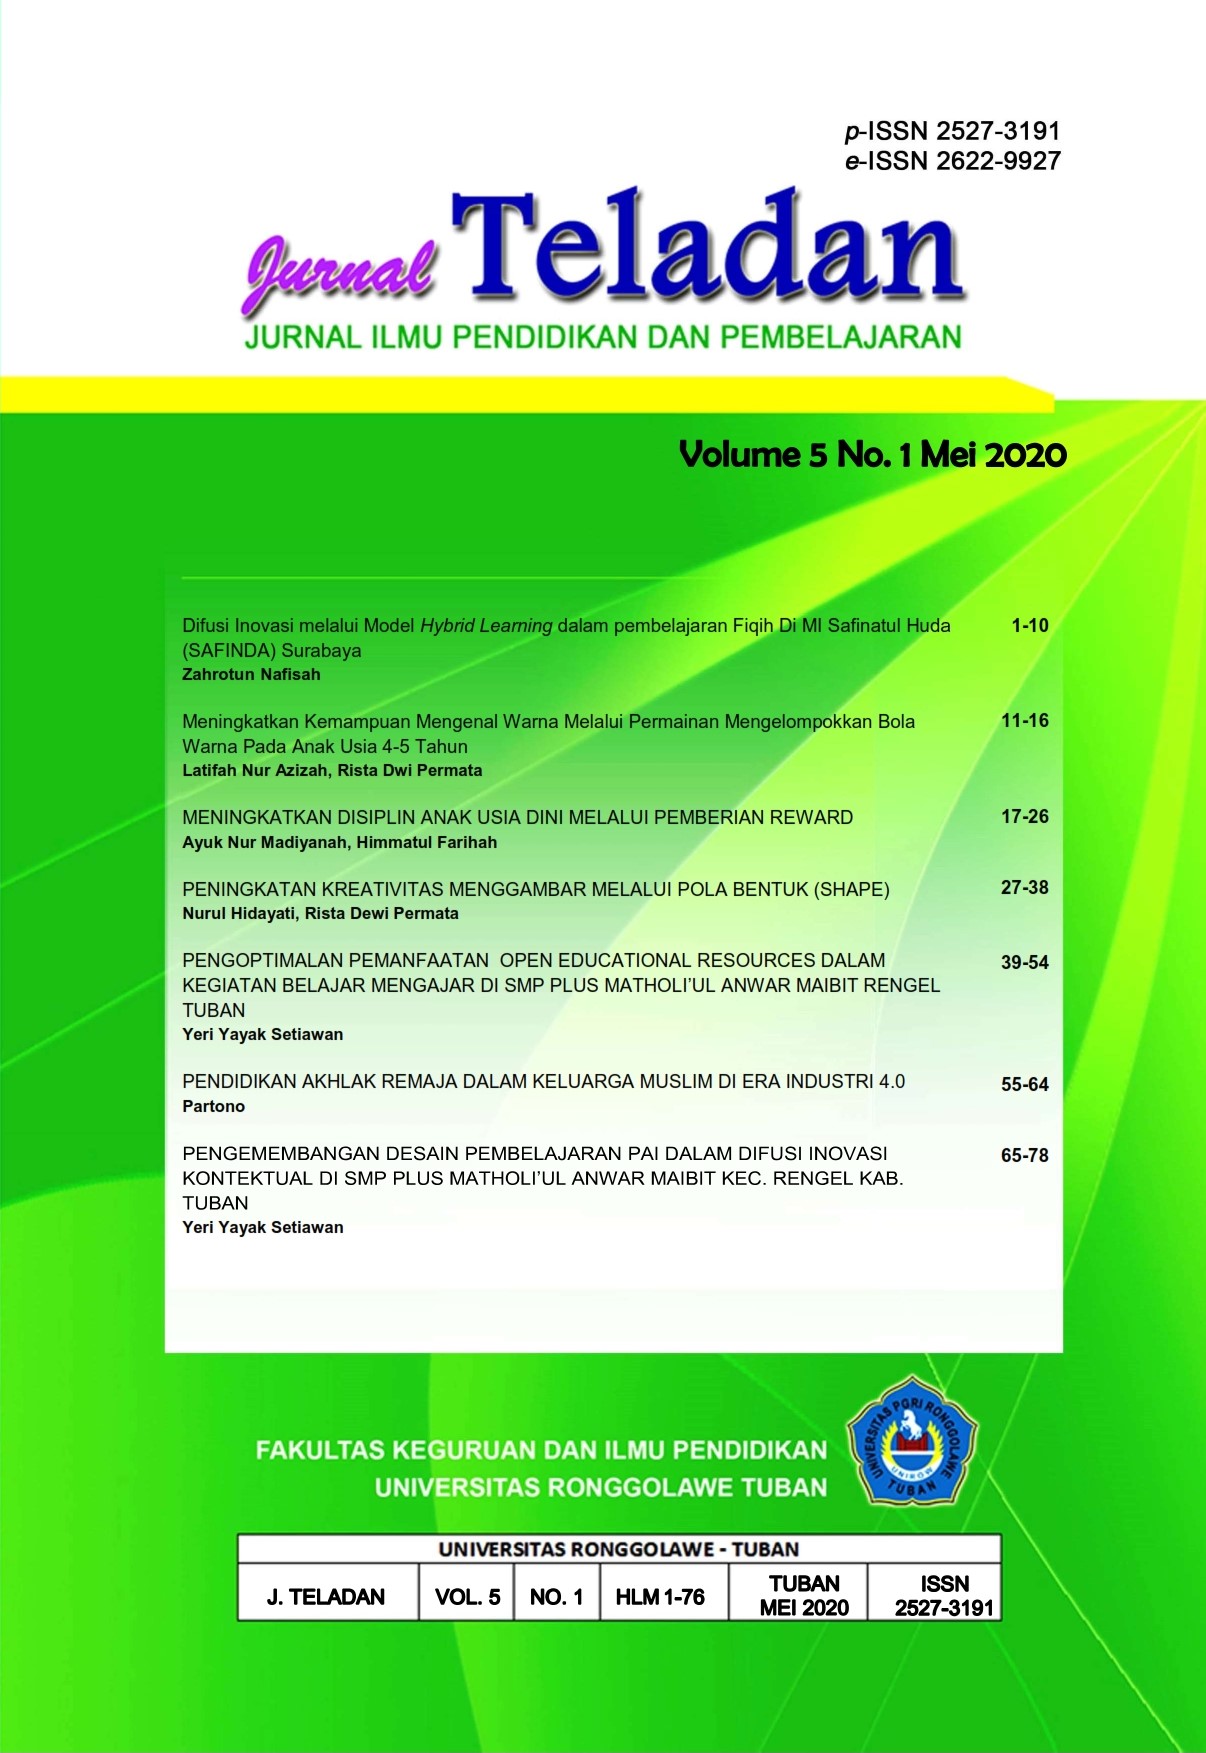 					Lihat Vol 5 No 1 (2020): Jurnal Teladan Vol.5. No.1 Mei 2020
				